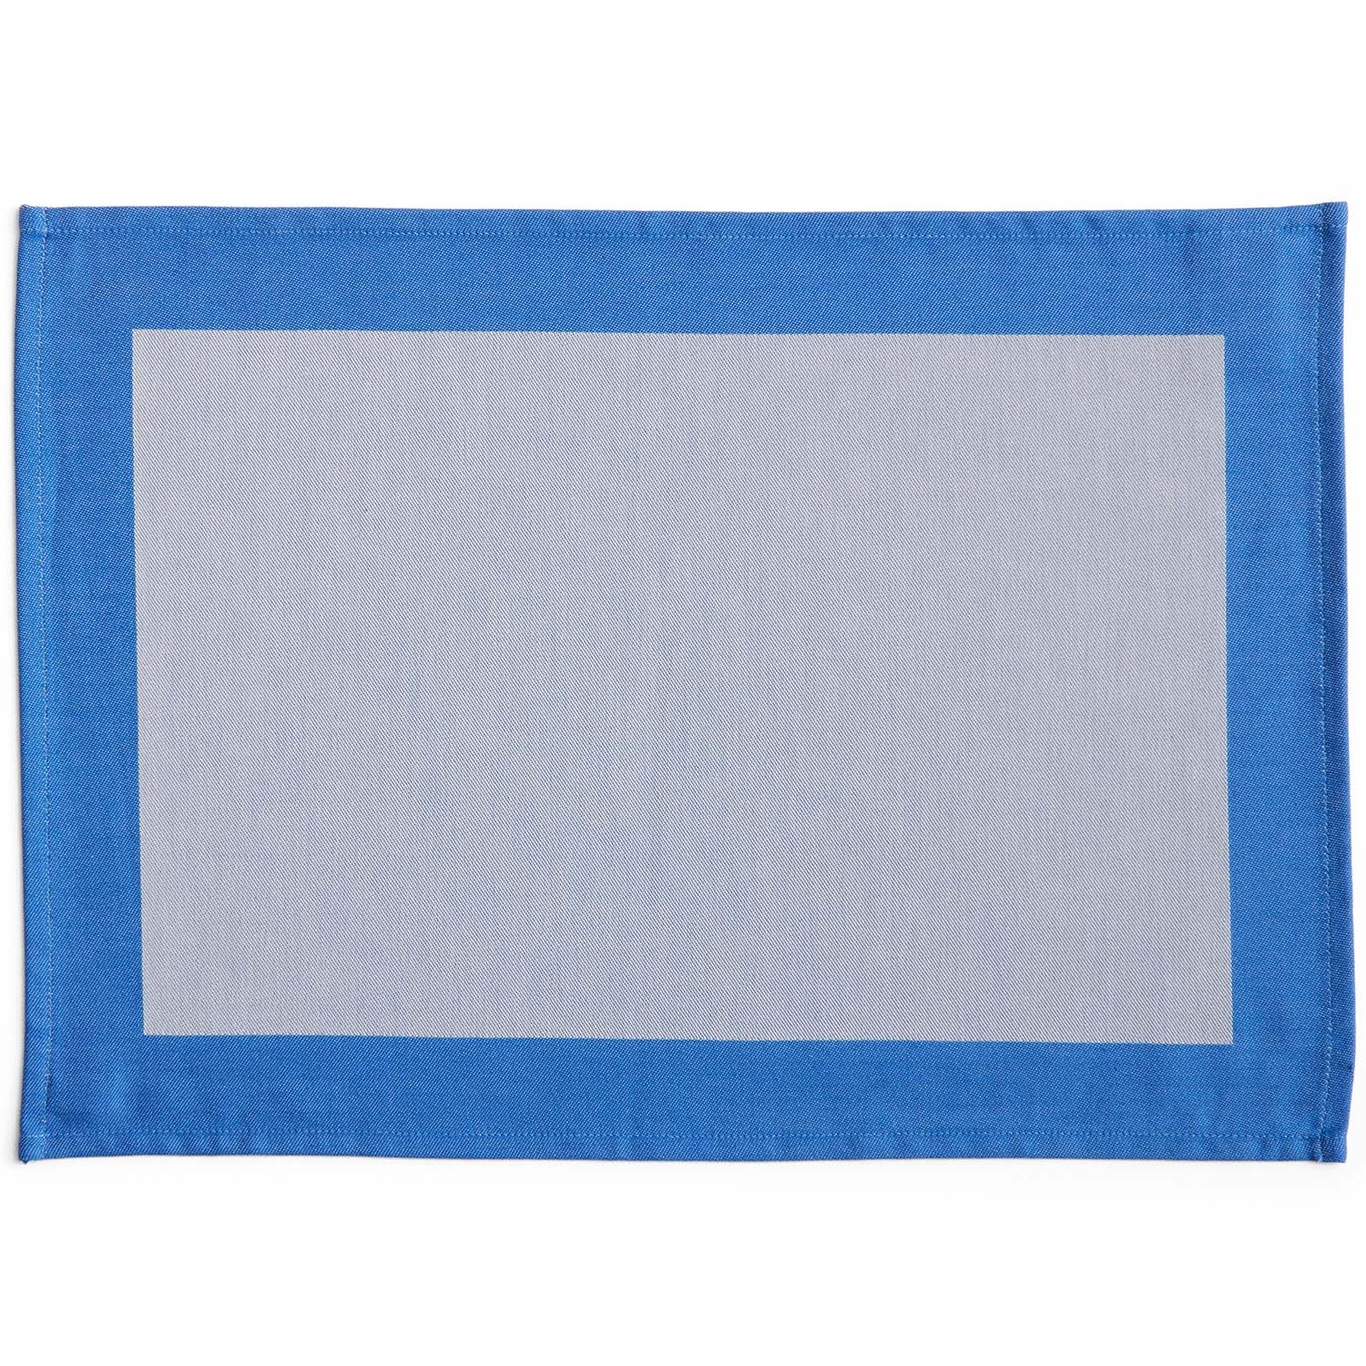 Ram Tischset 31x43 cm, Blau